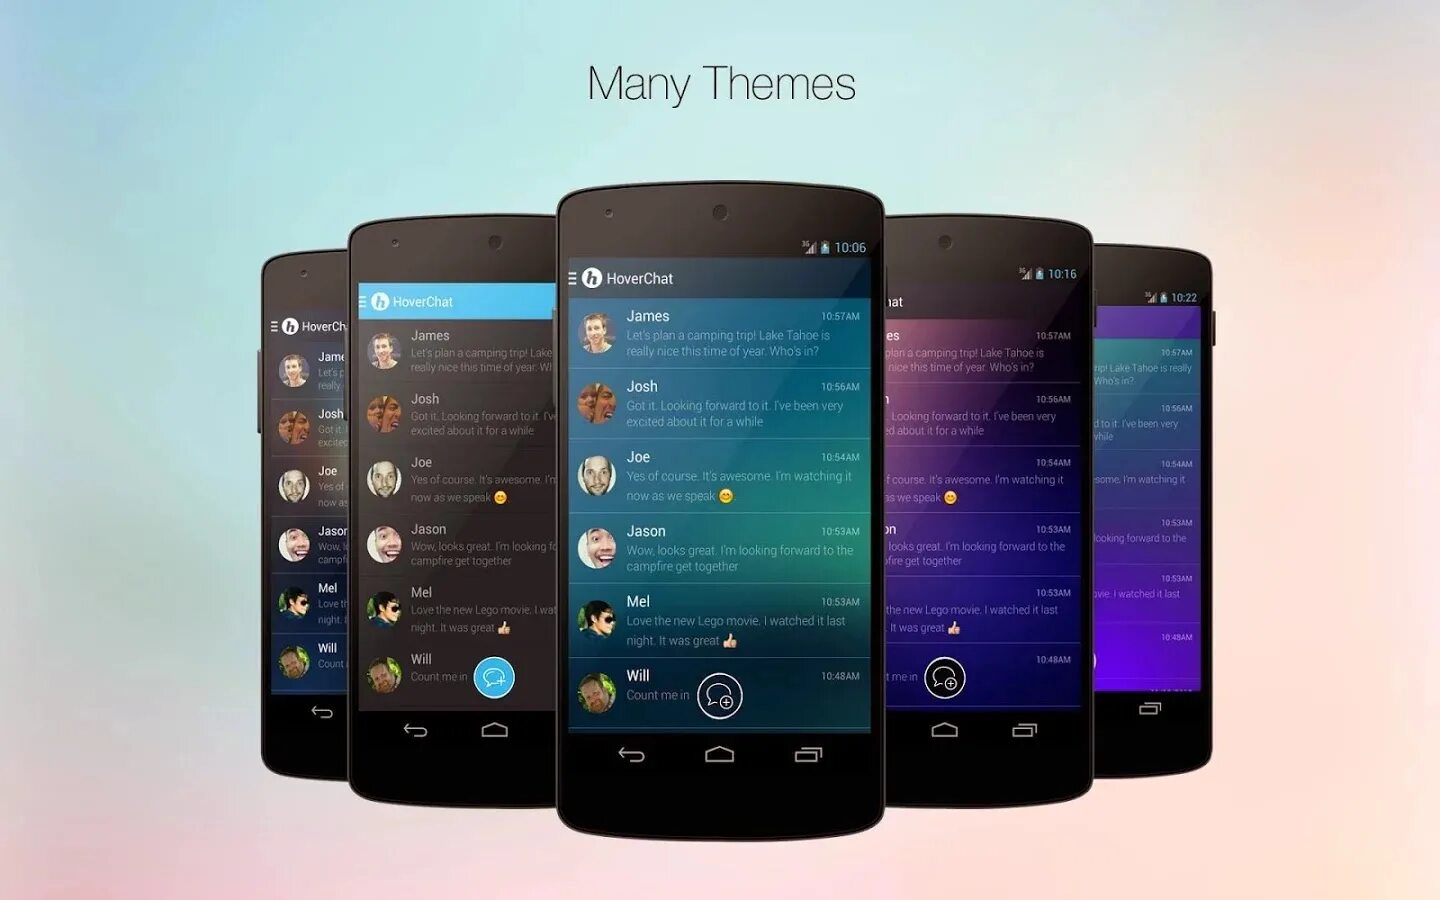 Бесплатное общение андроид. Смс андроид. SMS Android Интерфейс. Андроид 11 вид. Скриншот смс на андроиде.